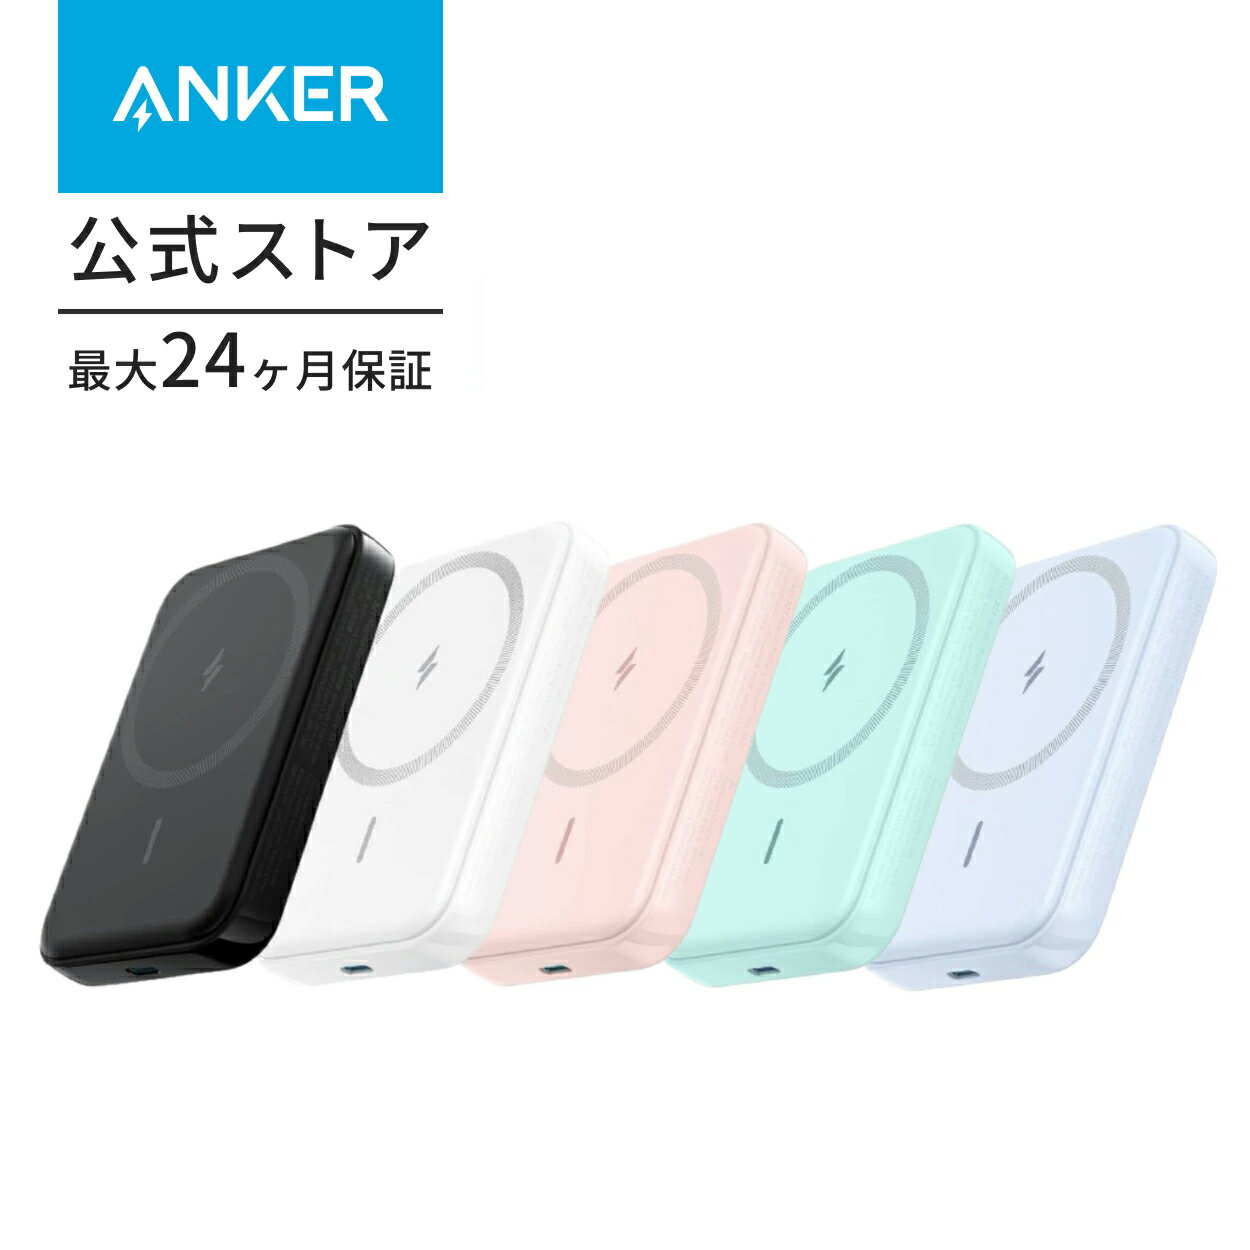 Anker 321 MagGo Battery (PowerCore 5000) (マグネット式ワイヤレス充電対応 5000mAh コンパクト モバイルバッテリー)iPhone 14 / 13 / 12